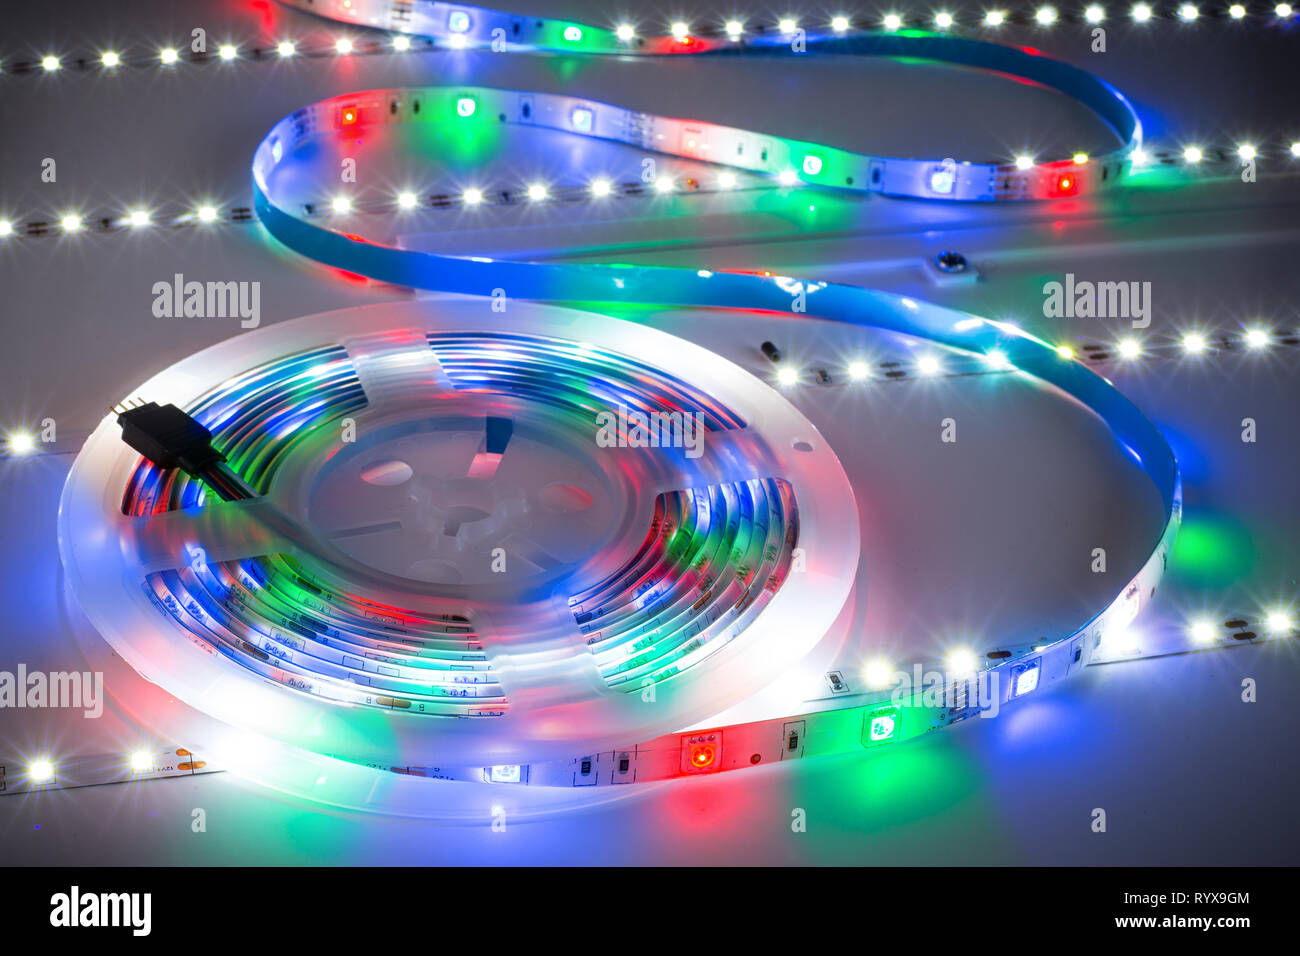 Bright RGB LED stripnon table with white strips electronics energy saving decoration technology background Stock Photo